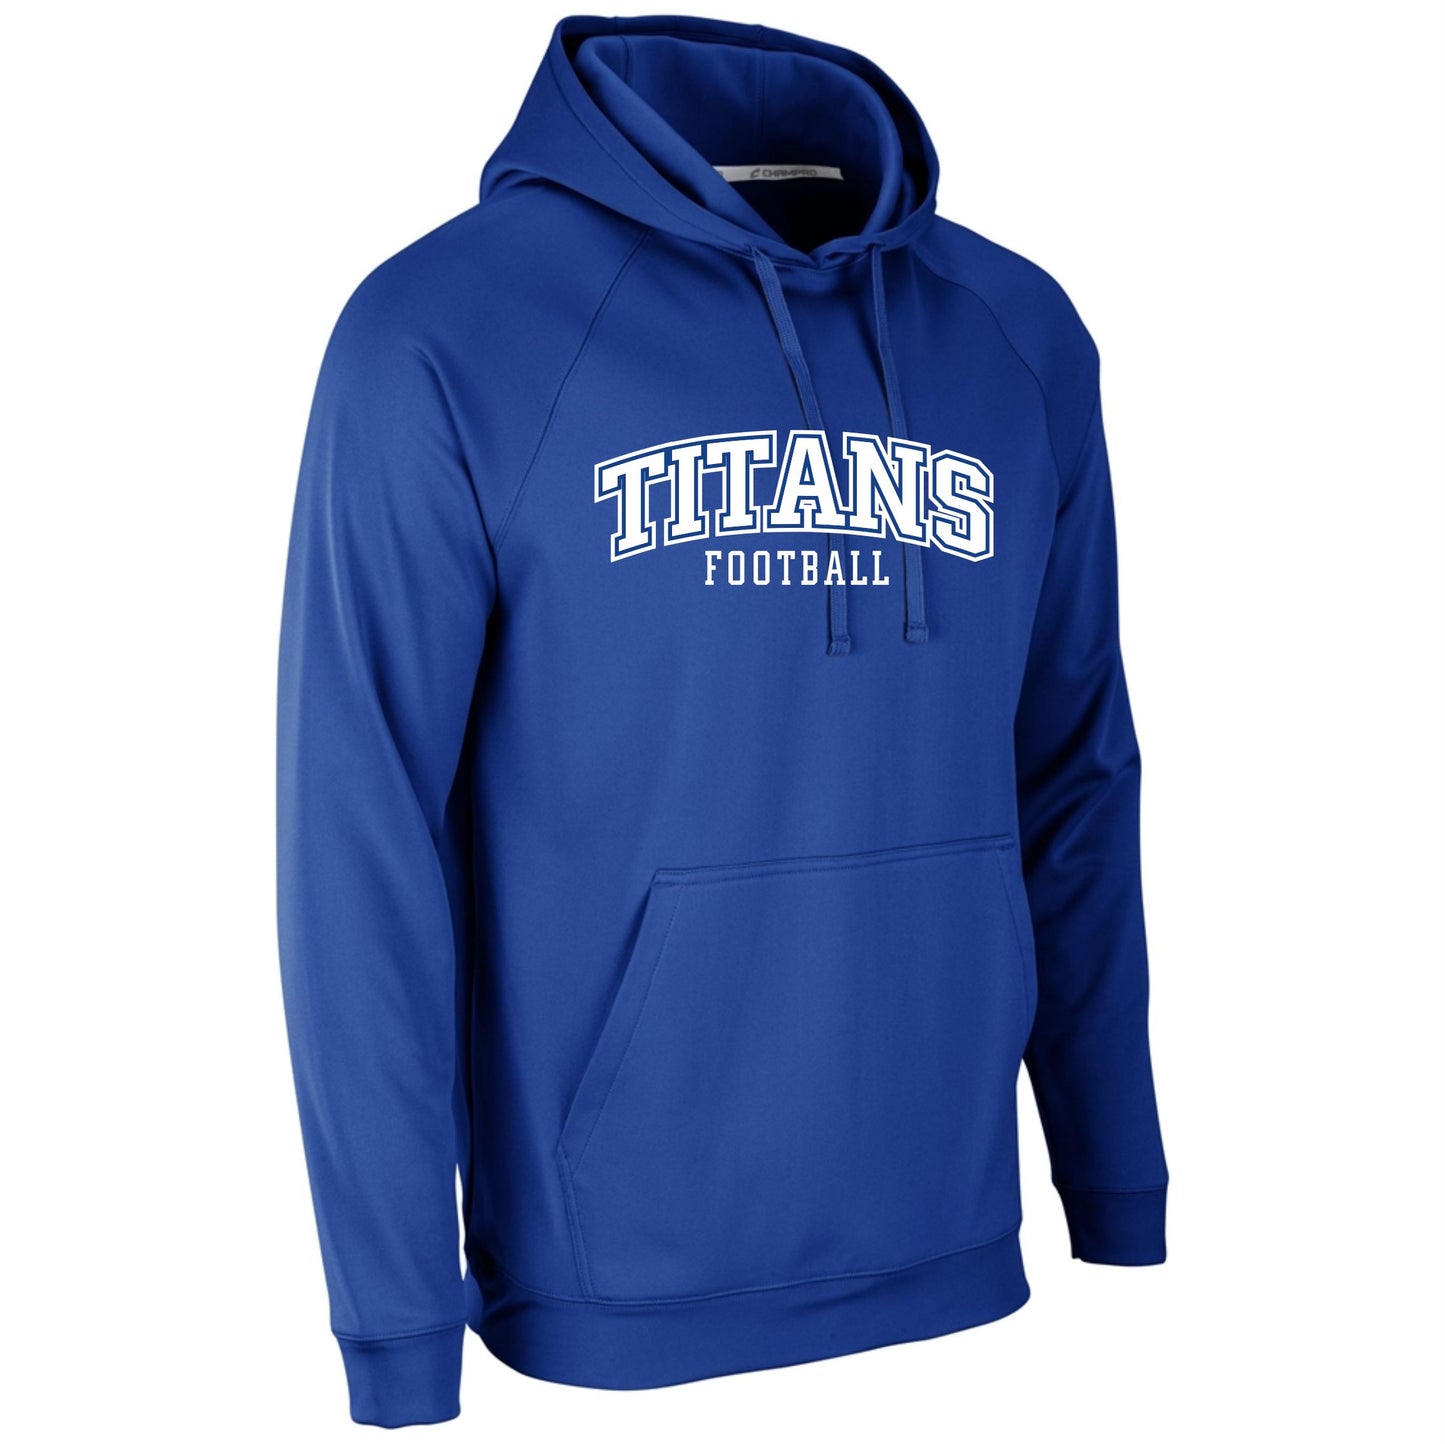 Titans Football Block - Outerwear